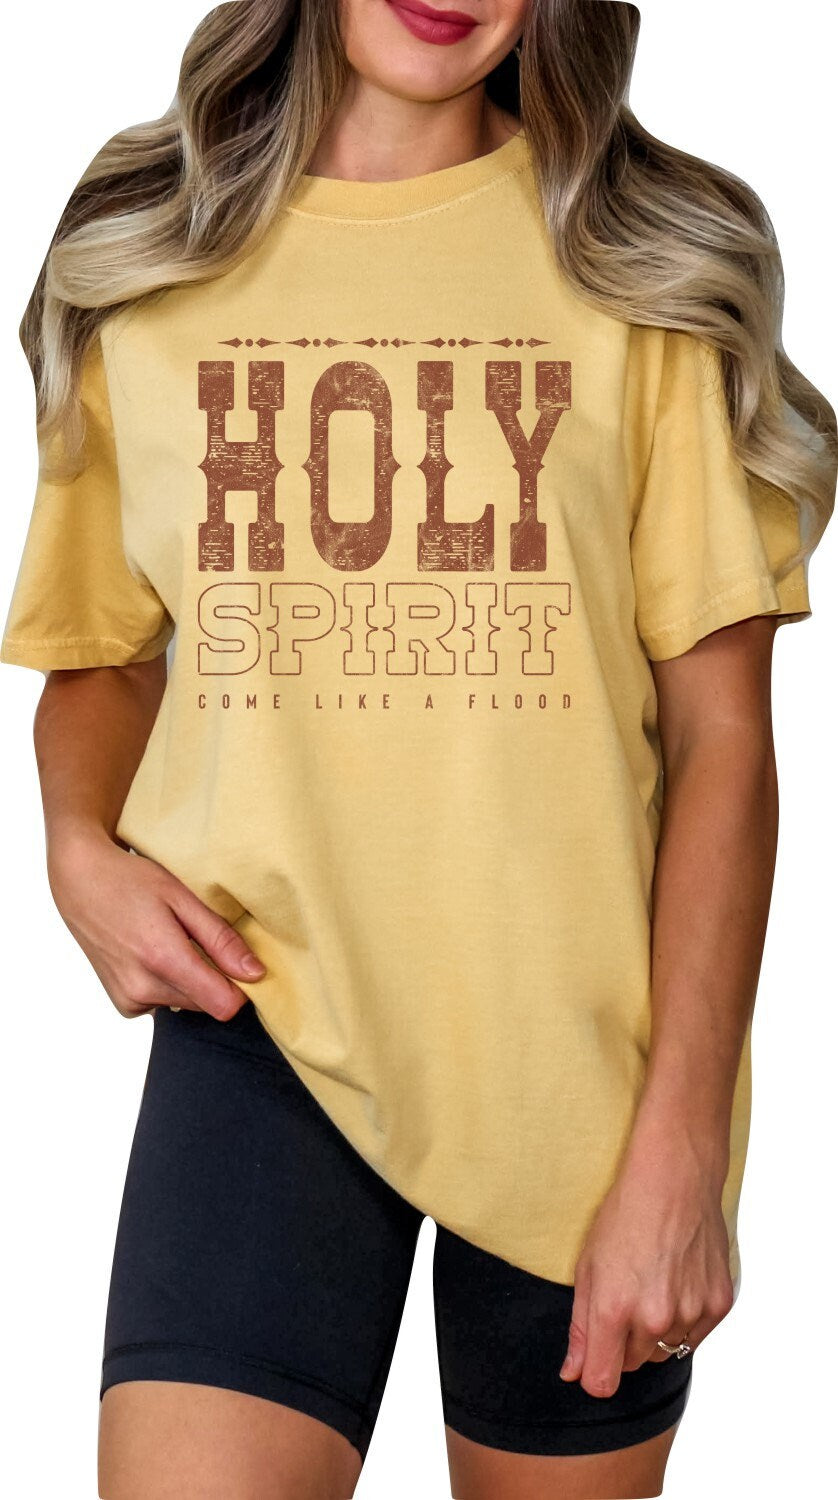 Christian Shirts Religious Tshirt Christian T Shirts Boho Christian Shirt Bible Verse Shirt Holy Spirit Come Like a Flood Shirt